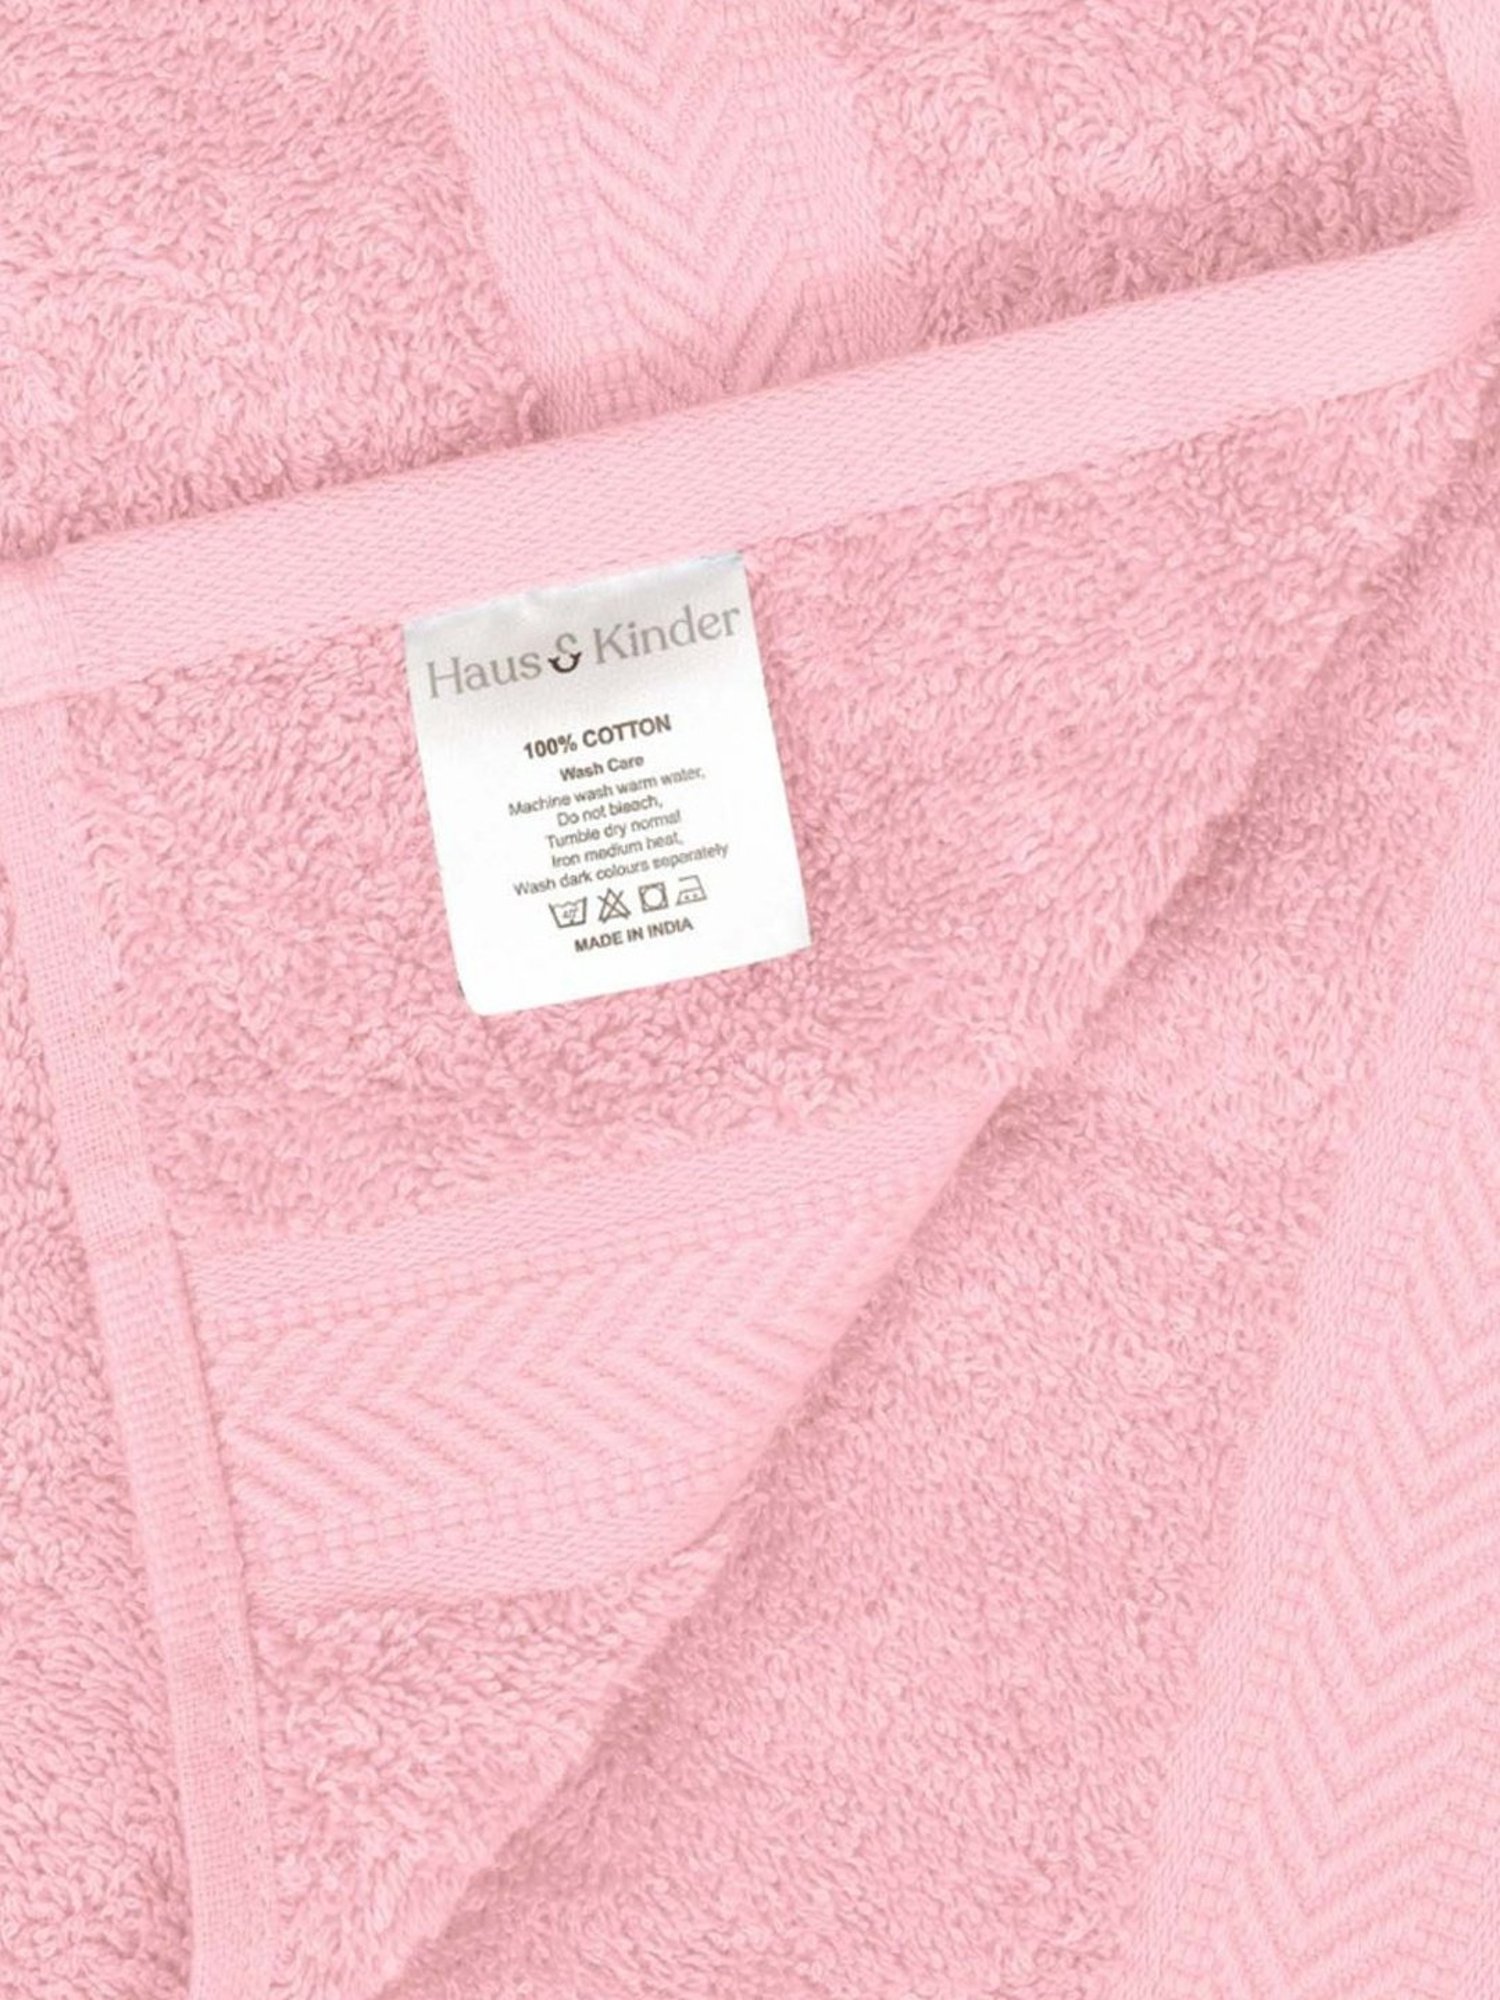 Buy Haus & Kinder Pink & Olive 500 GSM Cotton Bath Towel at Best Price @  Tata CLiQ